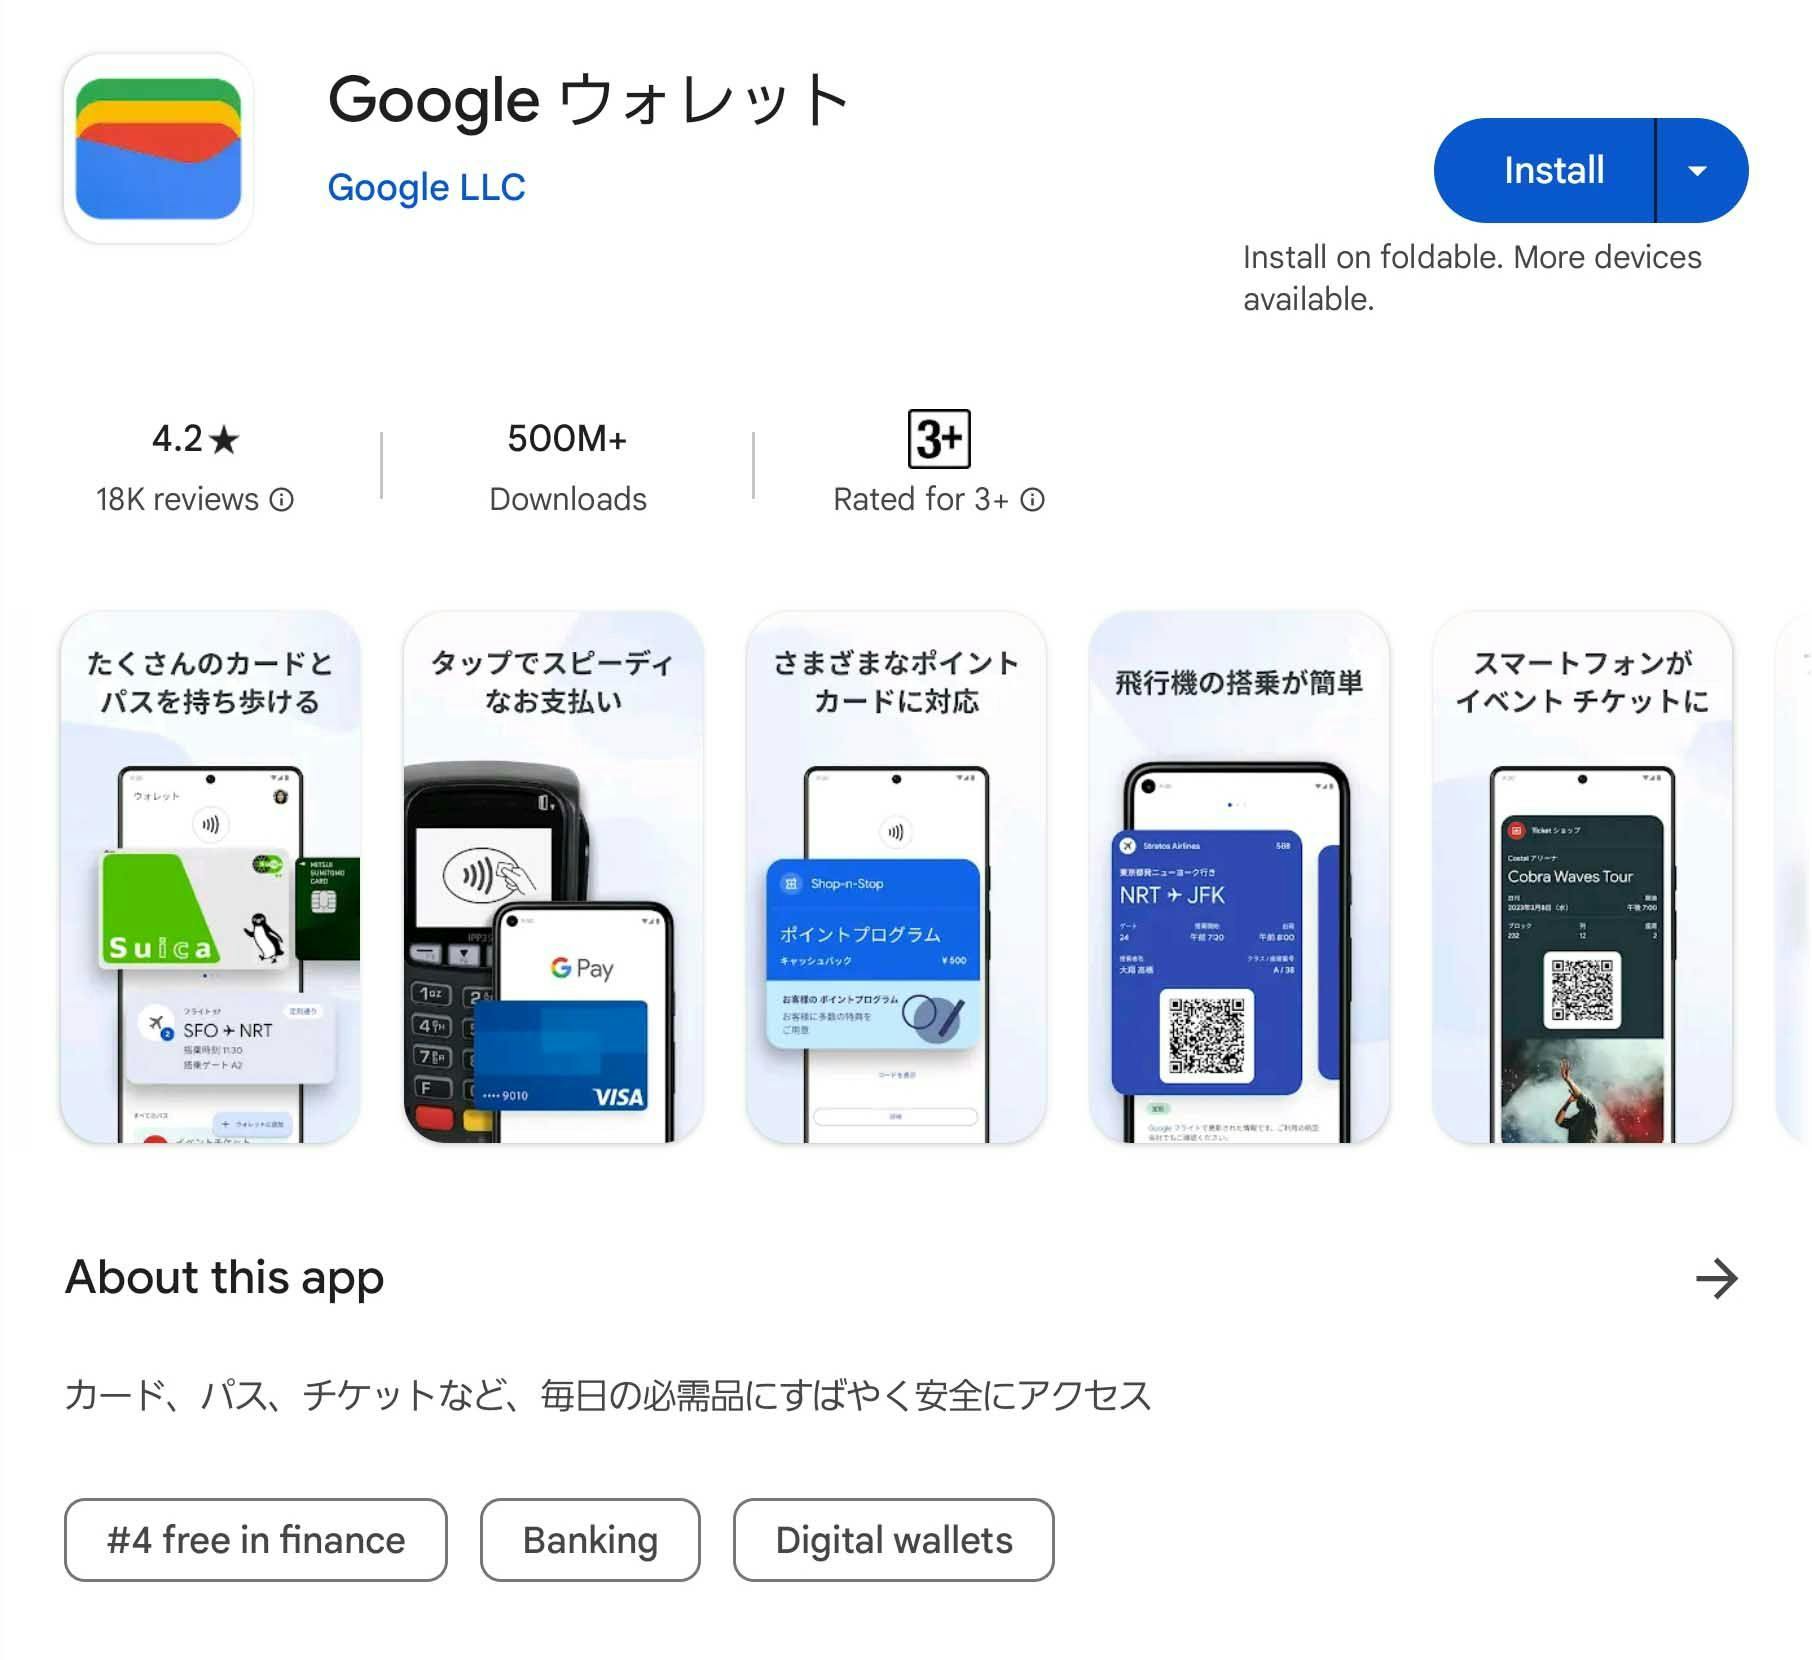 Google wallet in Japan